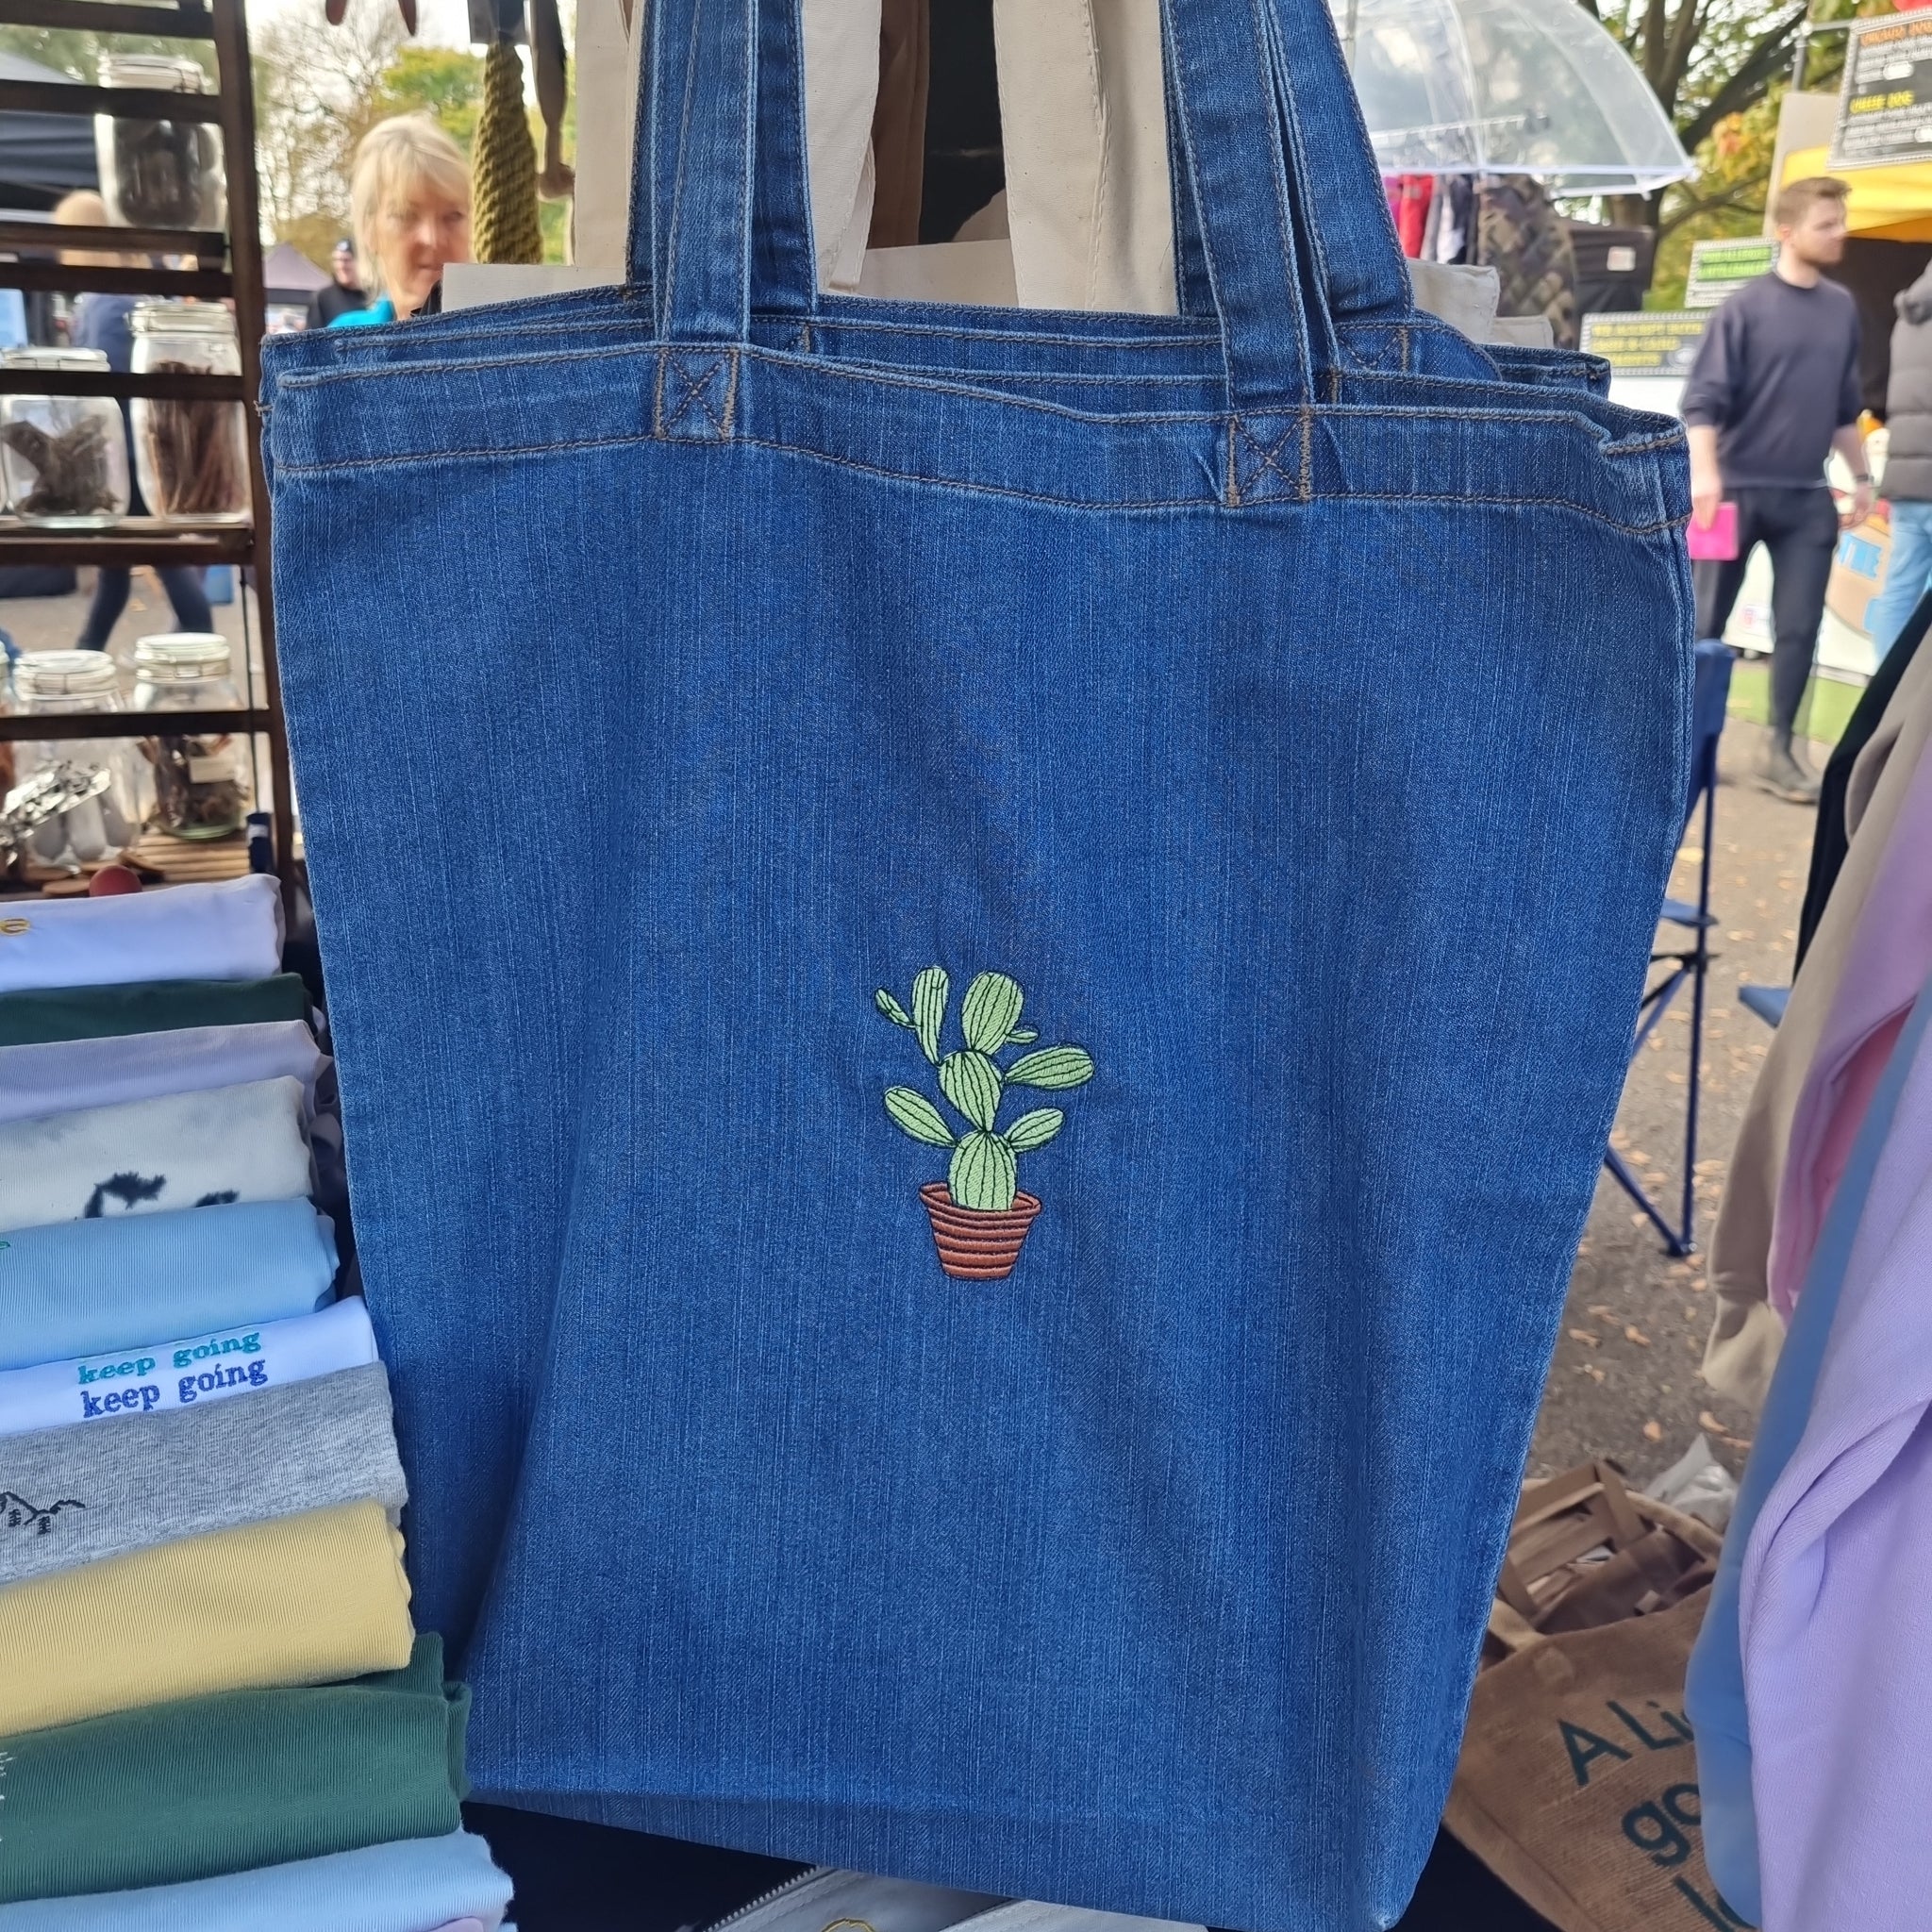 Embroidered Denim Cactus Tote Bag